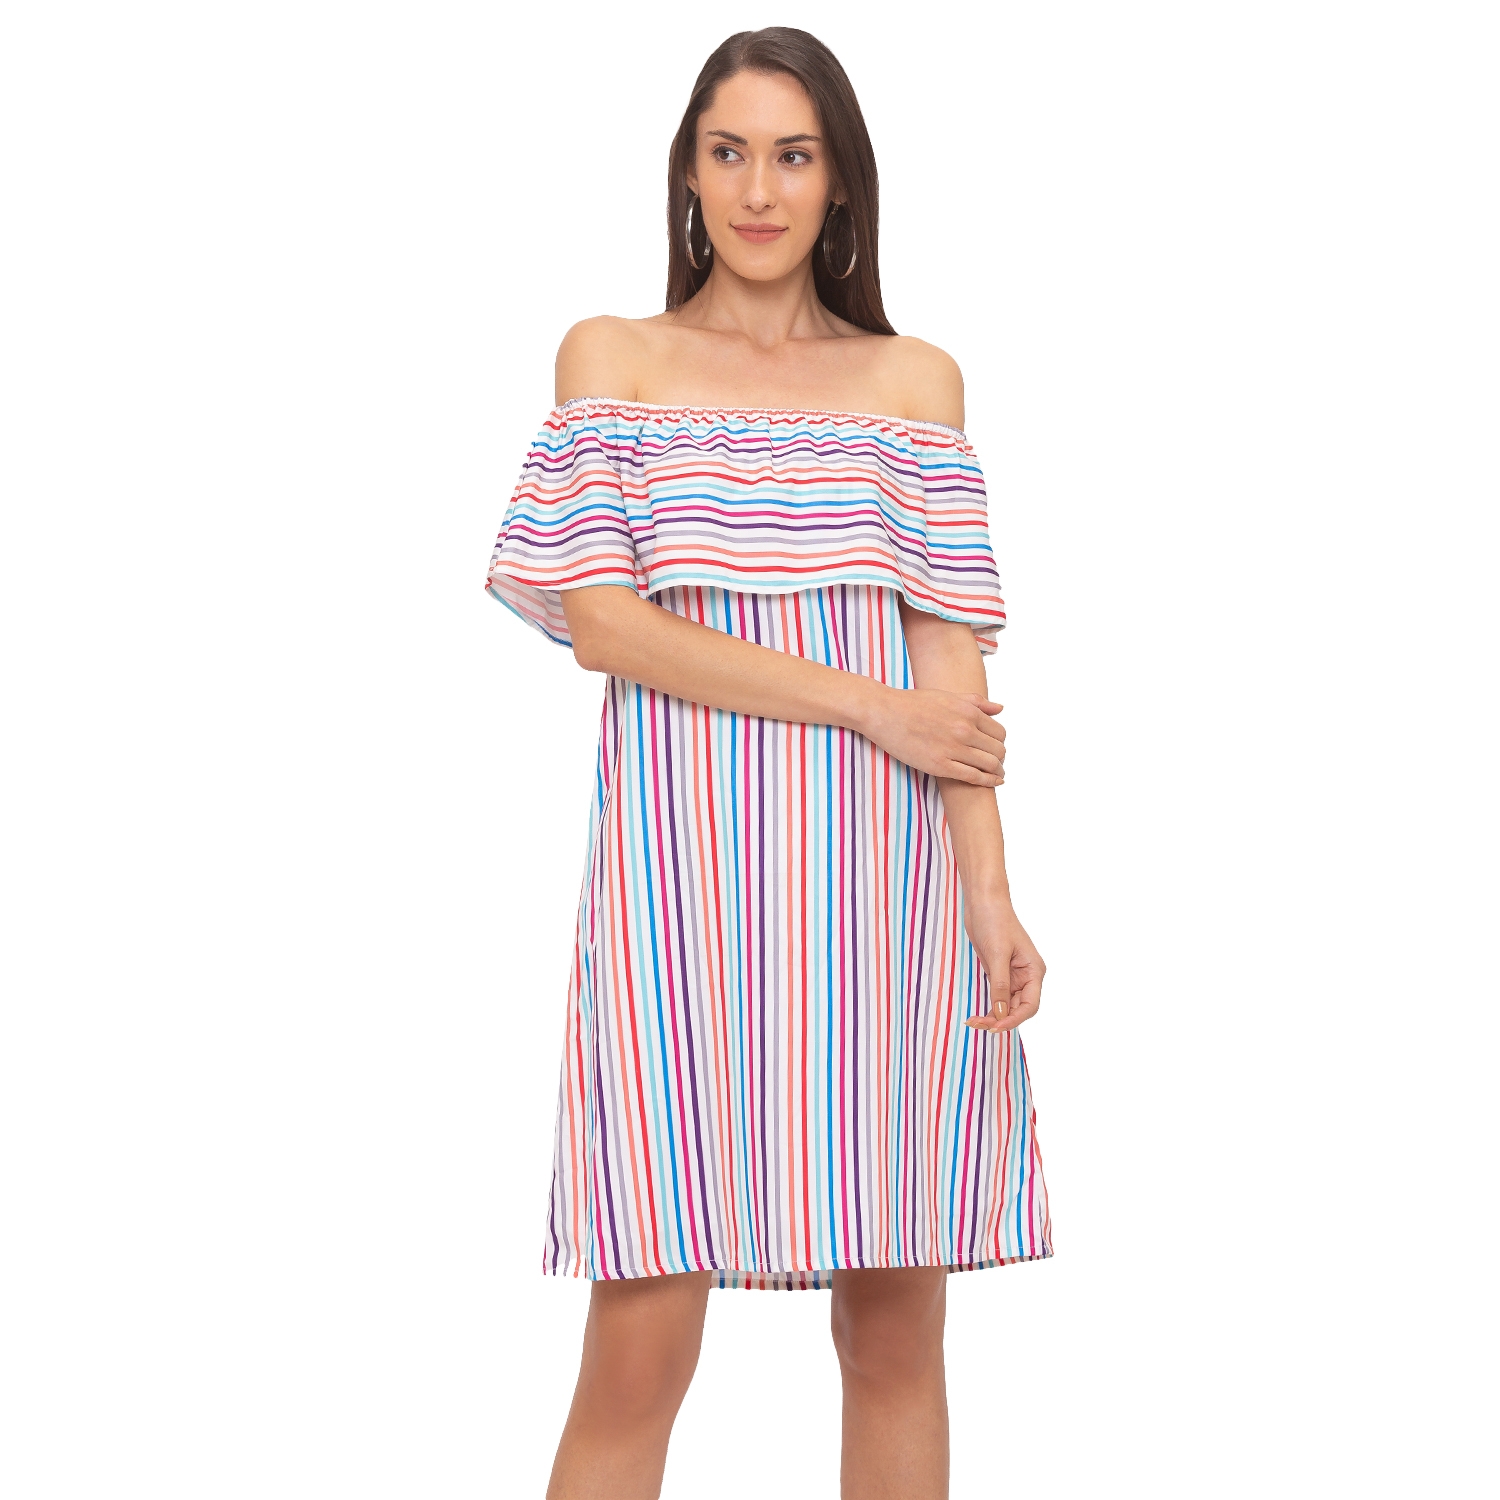 globus | Globus Multi Striped Dress